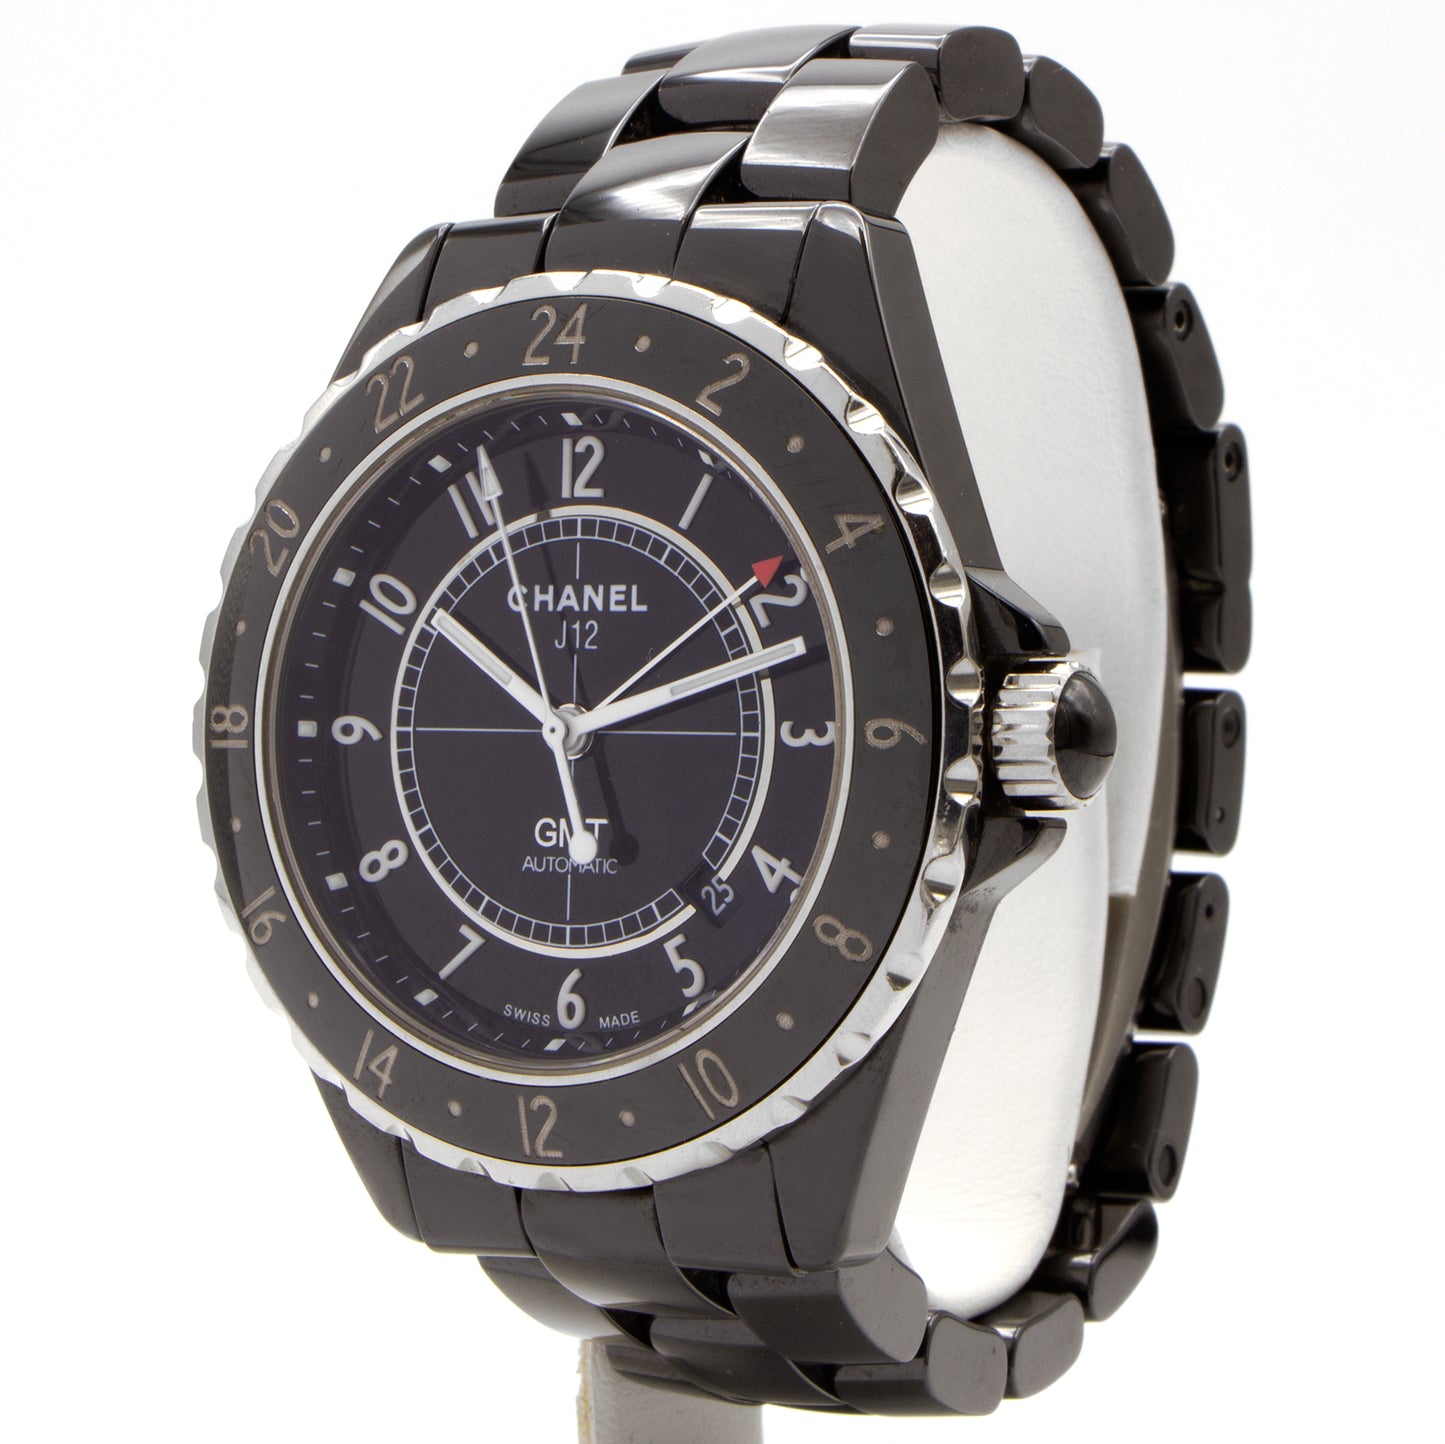 Chanel J12 GMT watch